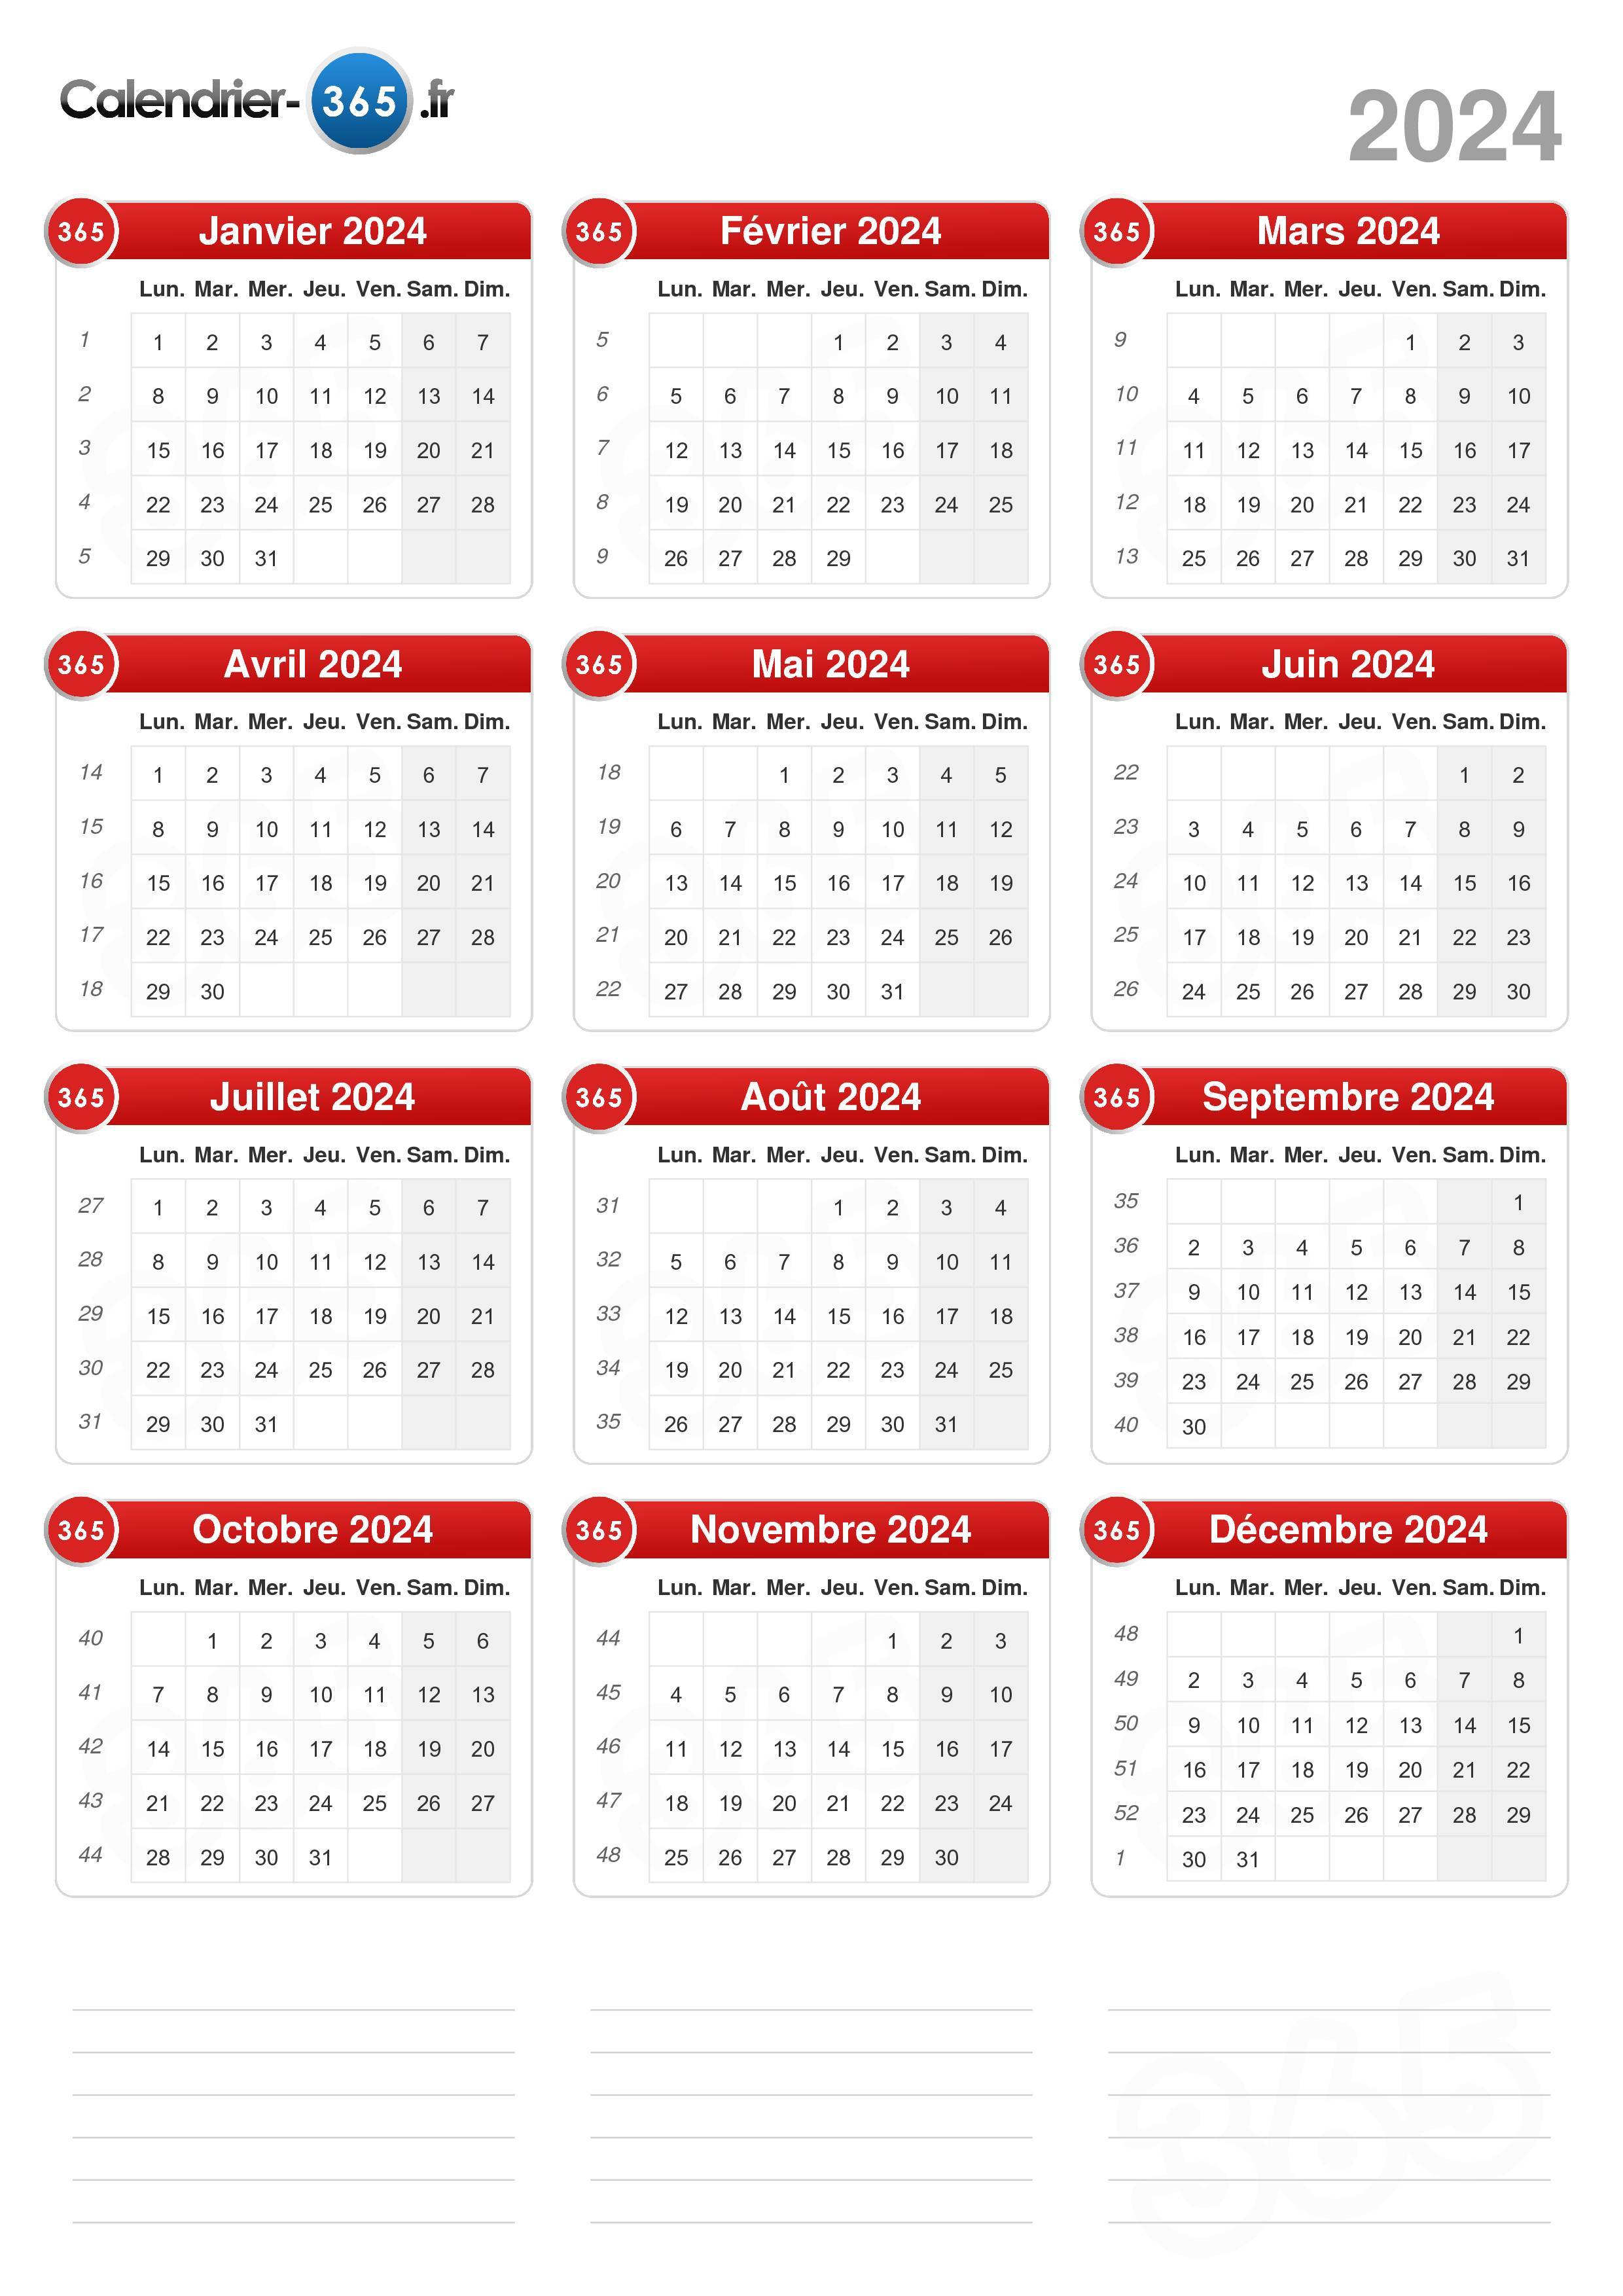 Créez un calendrier annuel 2024 en 3 clics